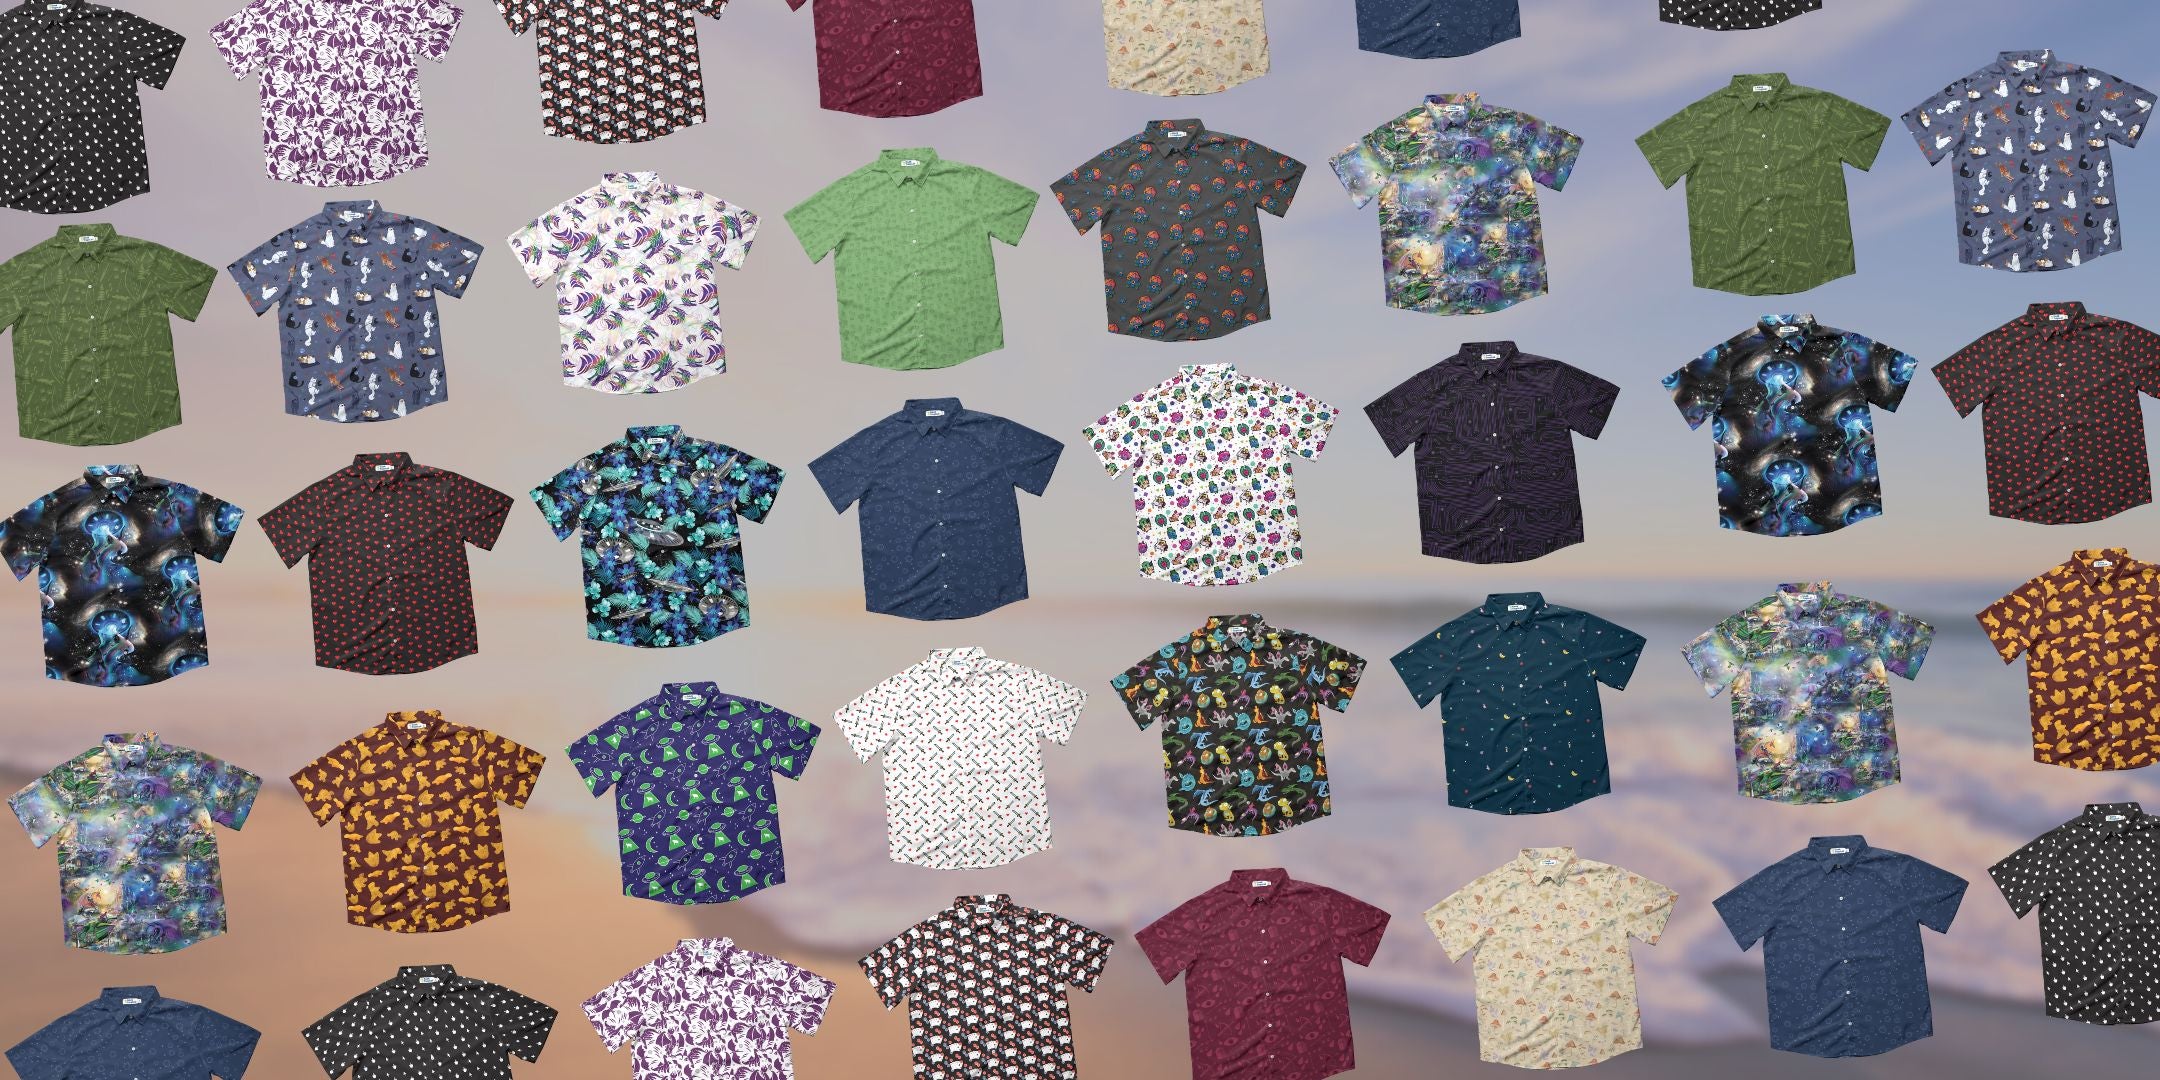 Geek Tropical: Cool Nerdy Hawaiian Shirts & Geek Button Up Shirts